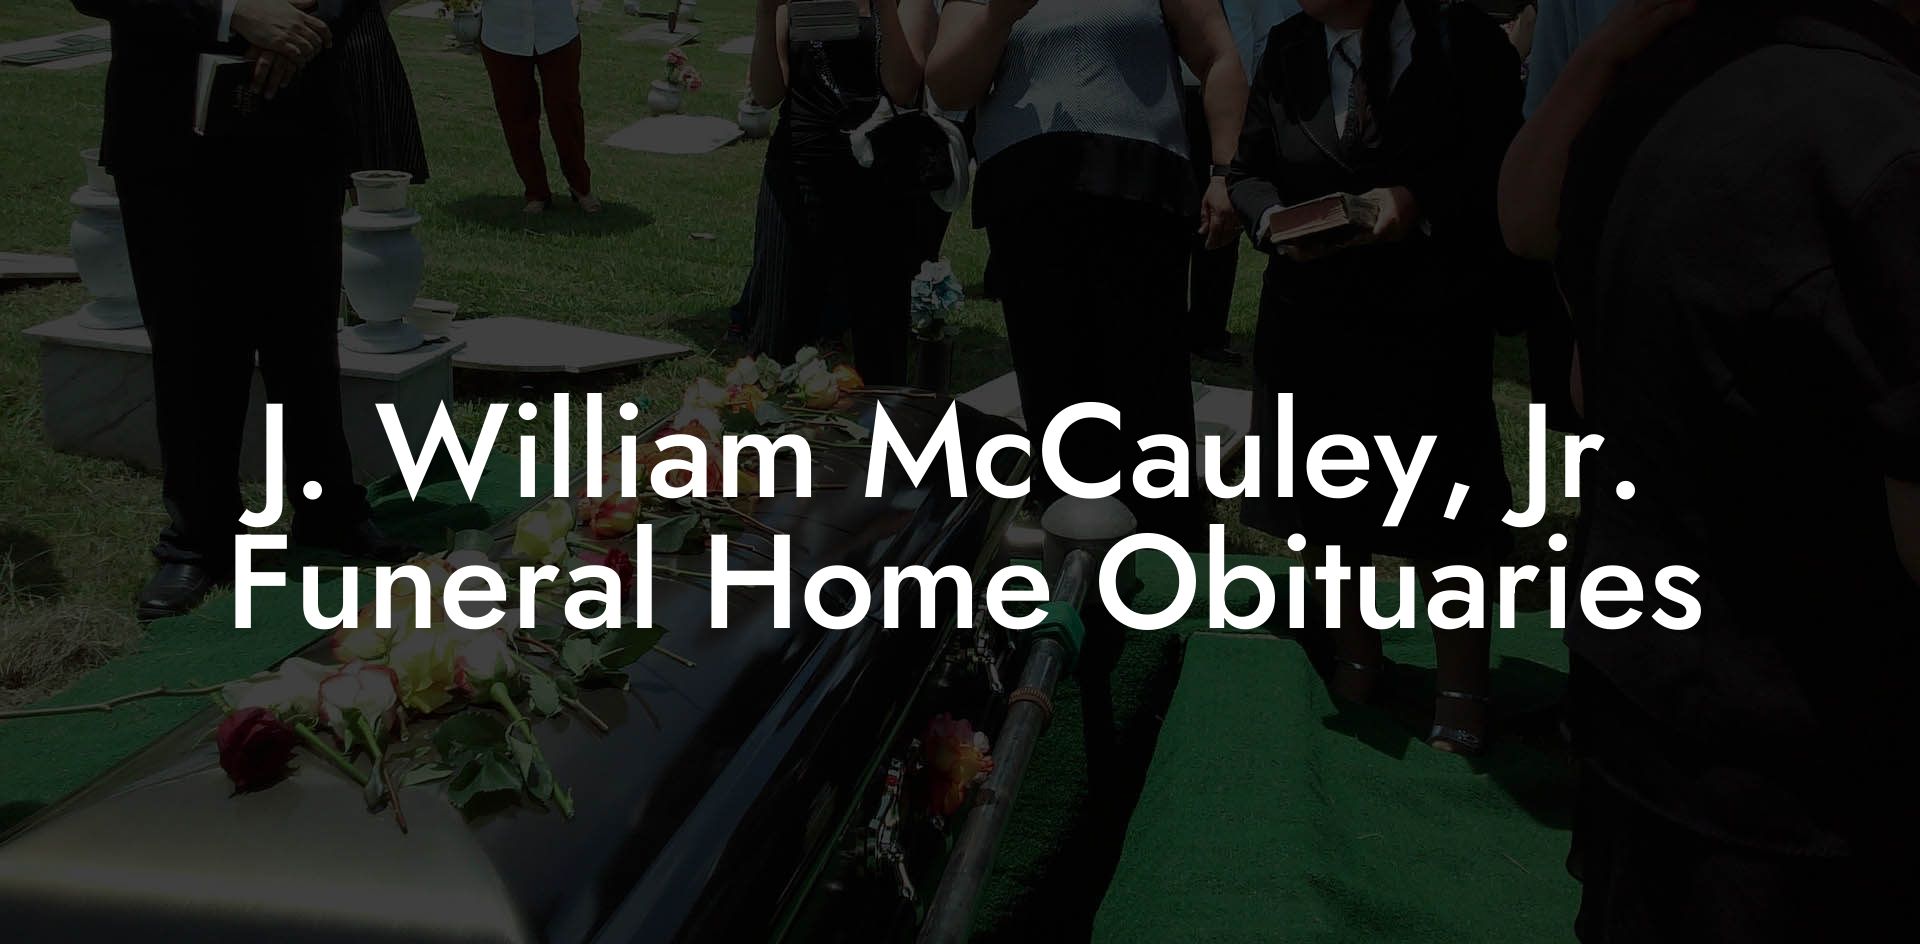 J. William McCauley, Jr. Funeral Home Obituaries